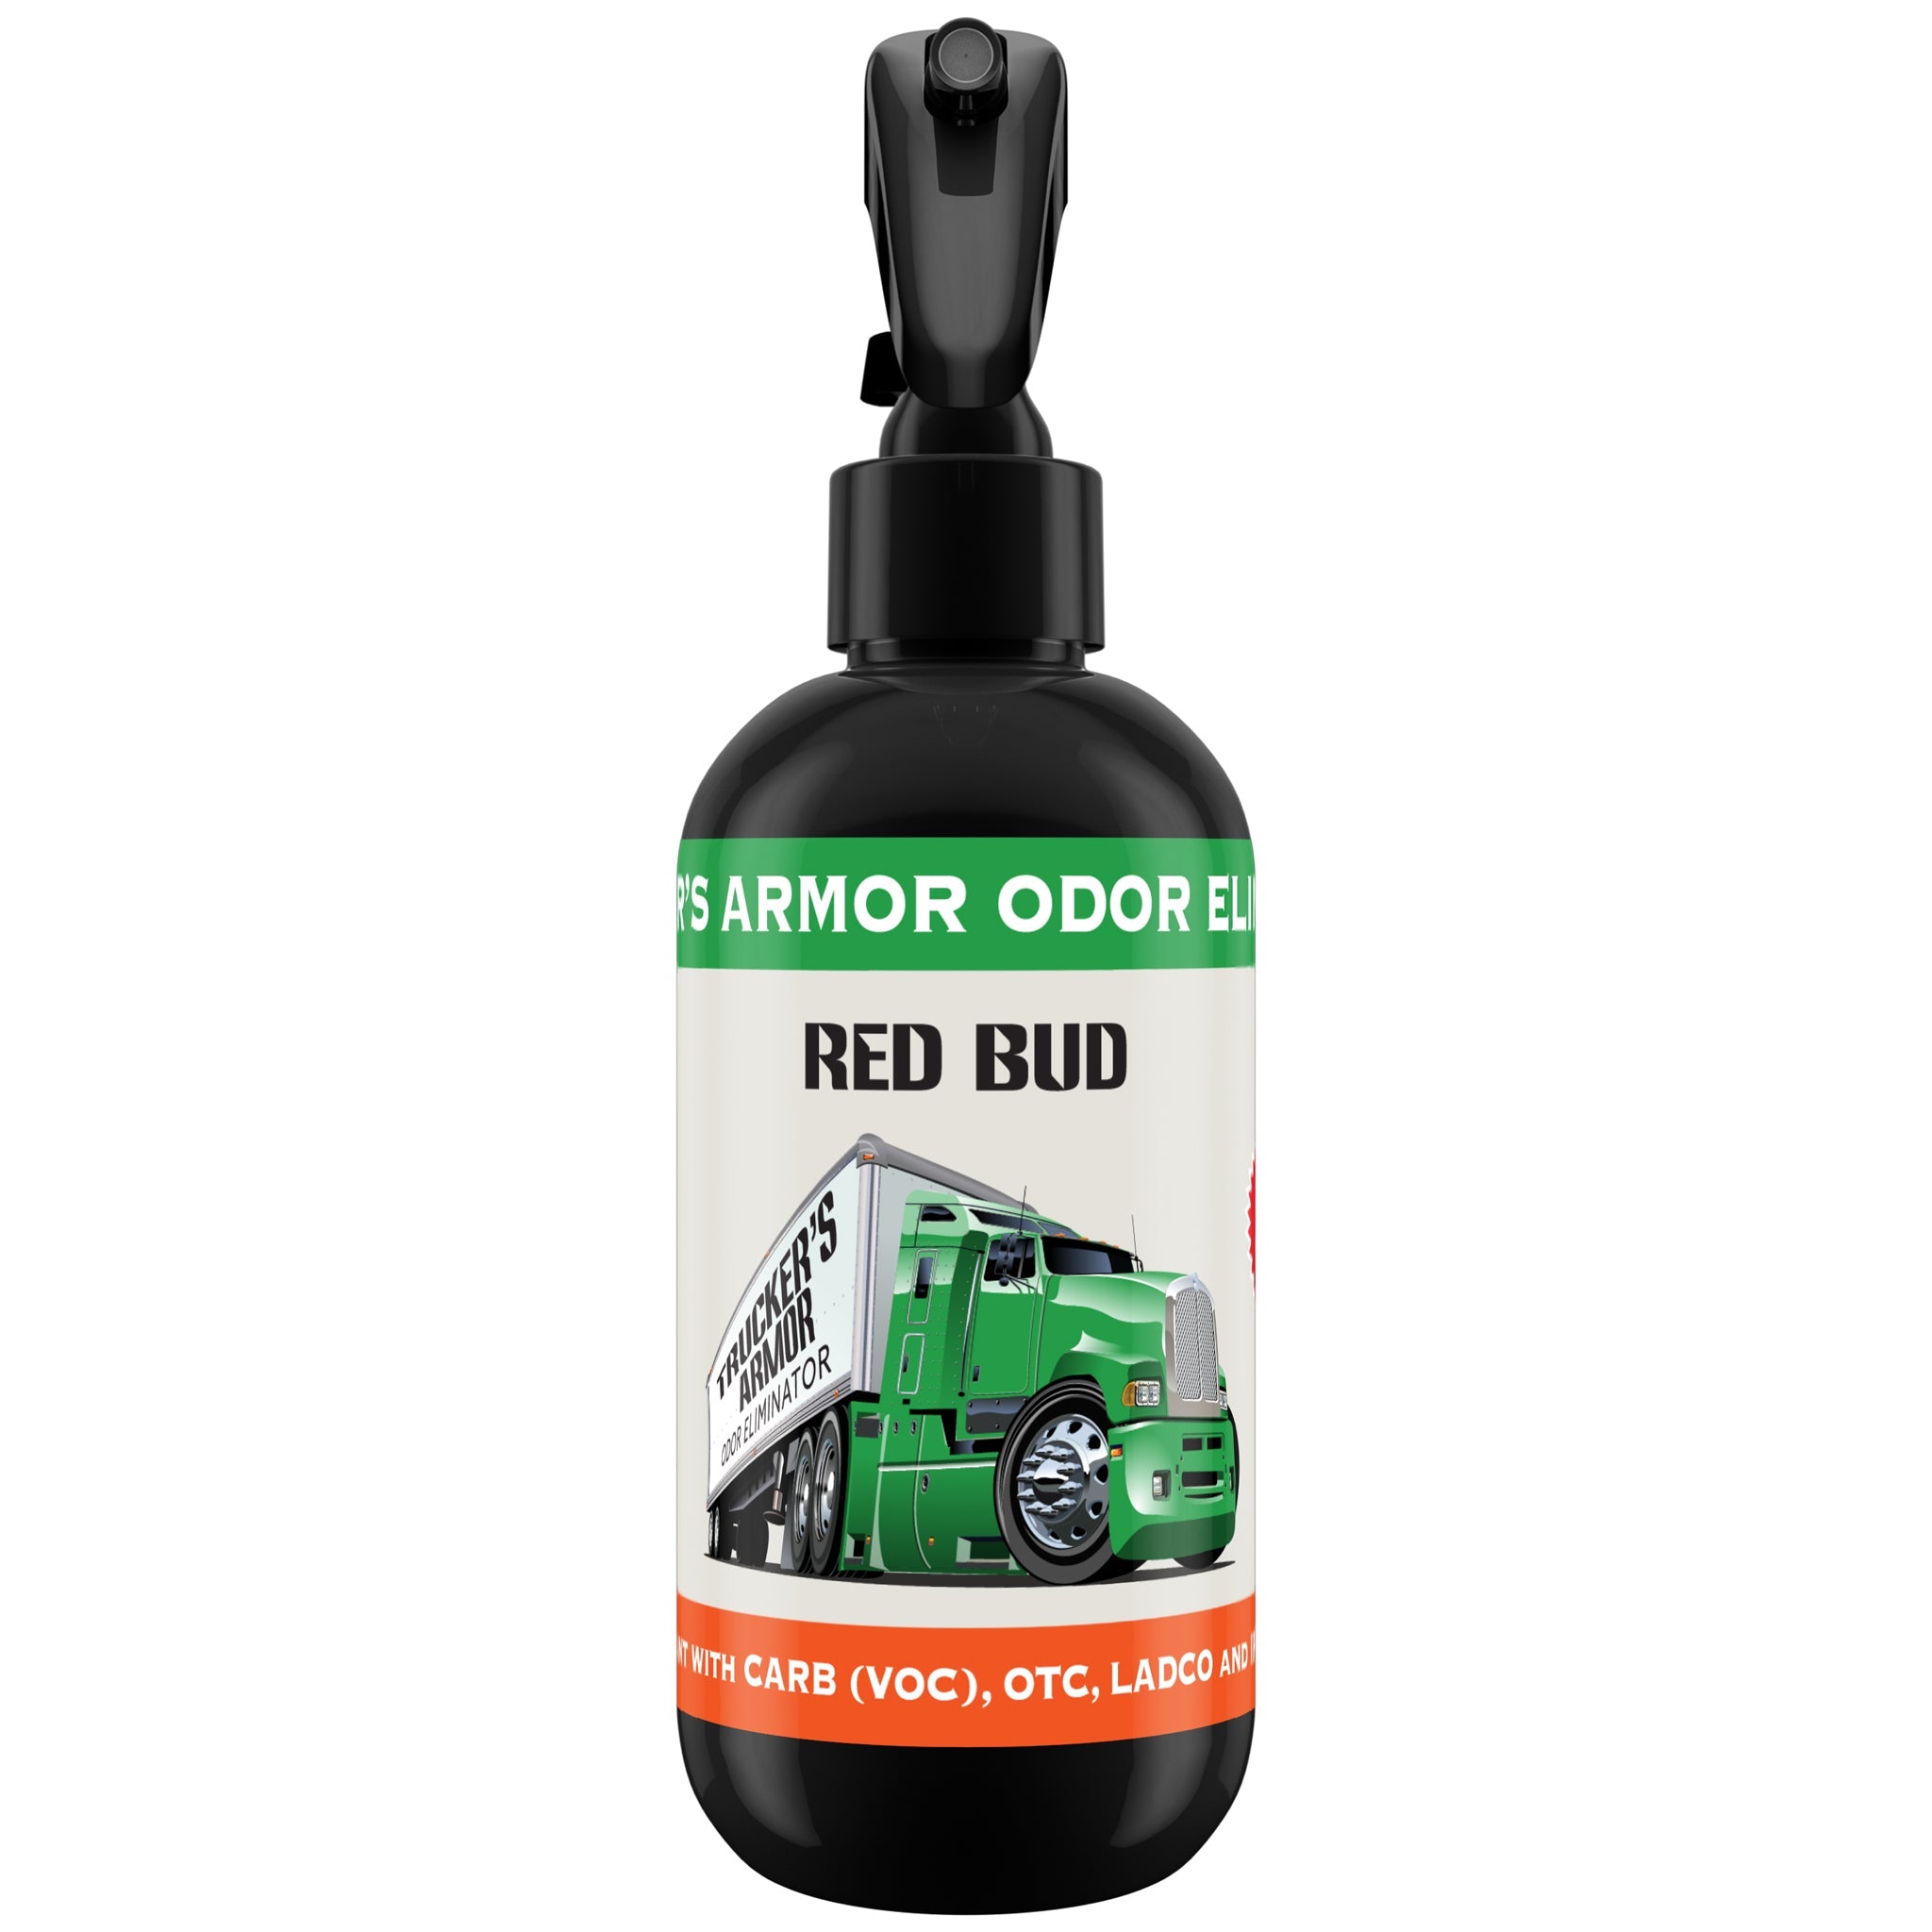 Trucker's Armor Odor Eliminator - Red Bud Scent